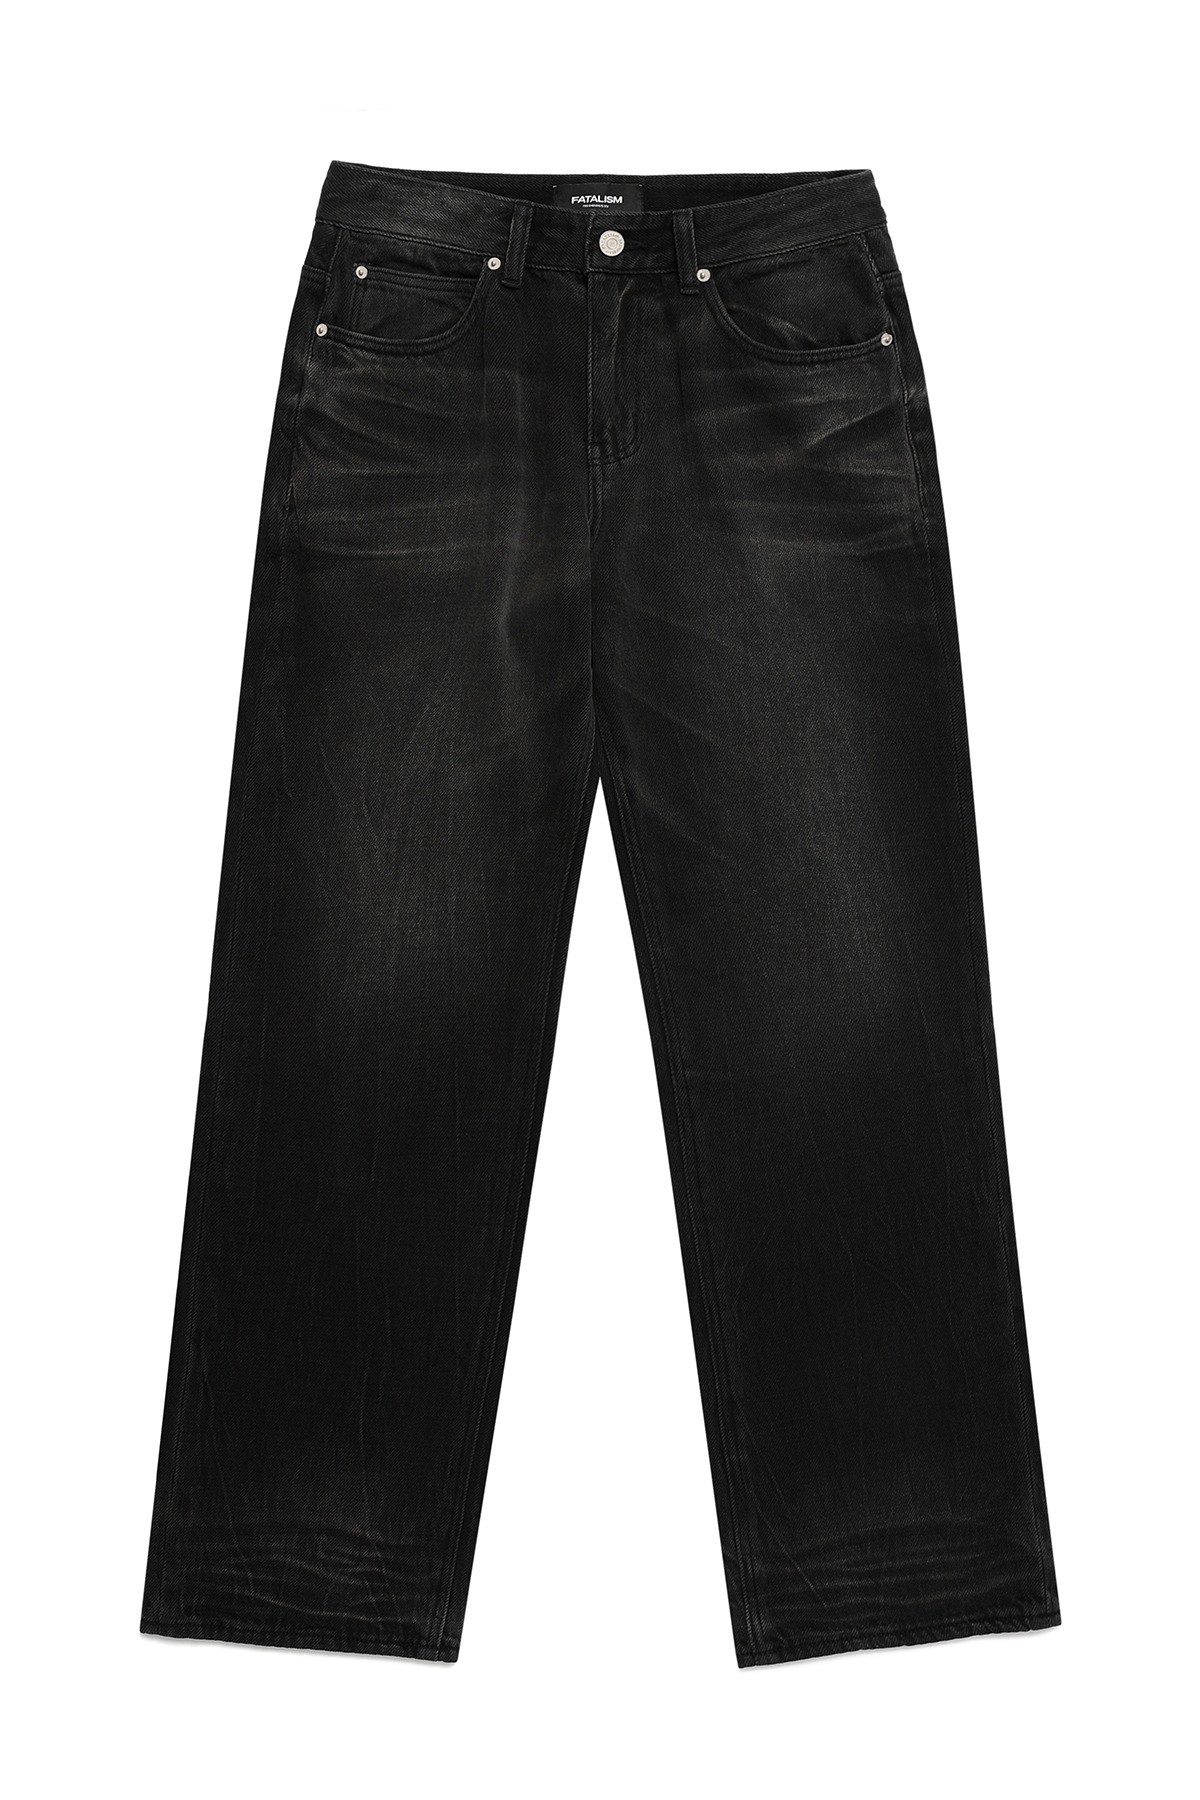 [PREORDER]#0305 Vintage popliteus destoryed wide jeans [10/07 예약배송]